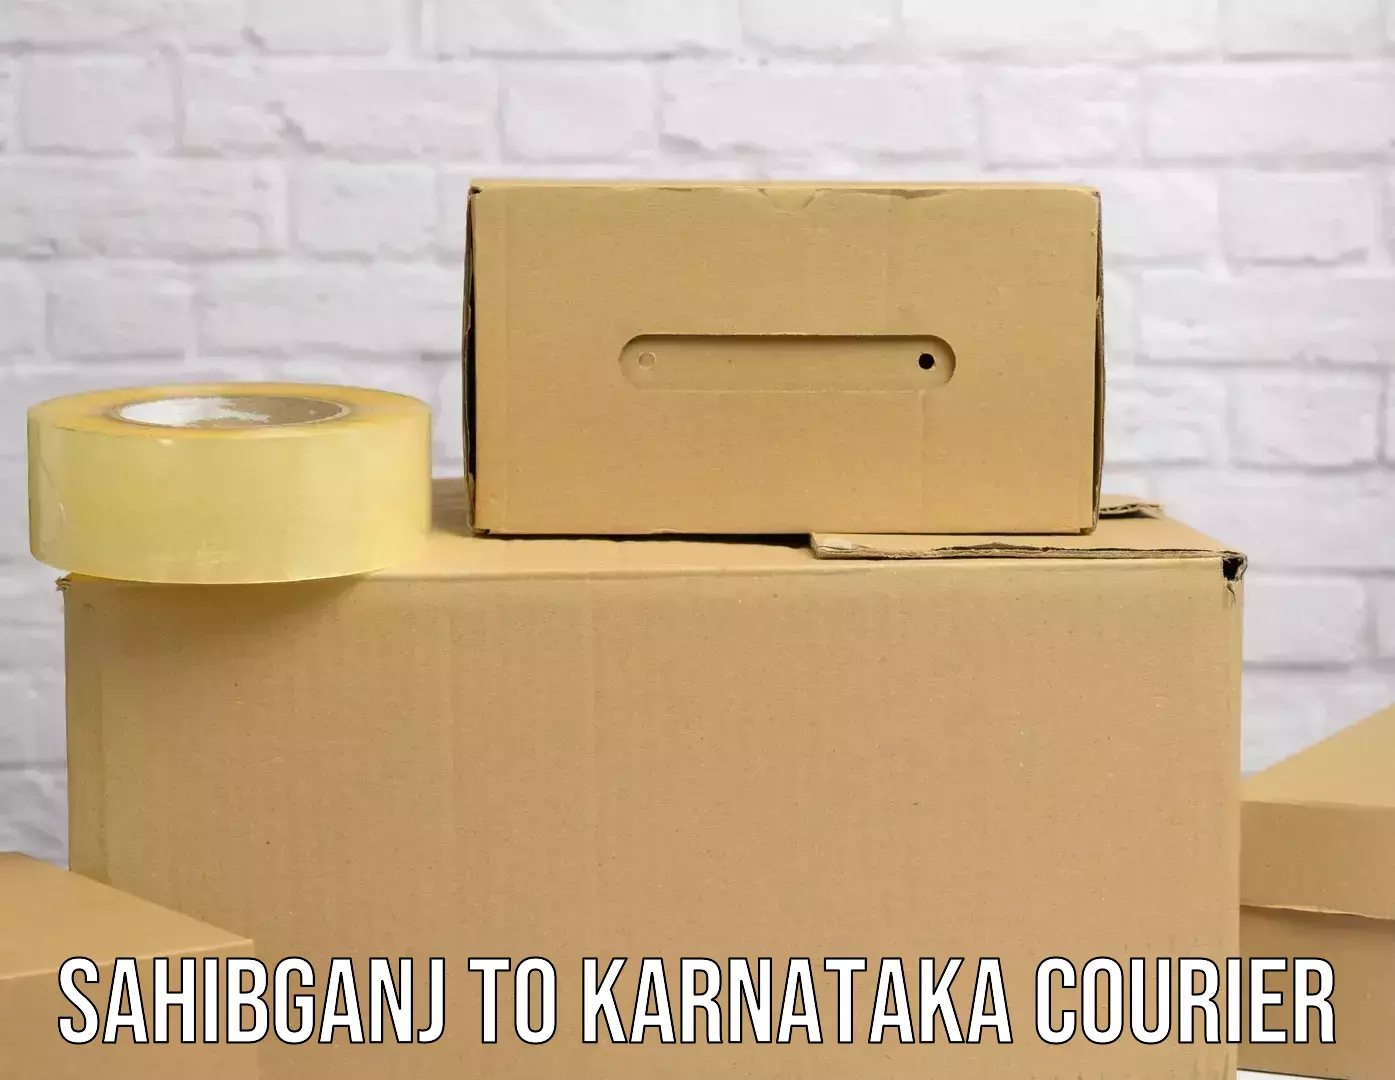 Digital courier platforms Sahibganj to Karnataka